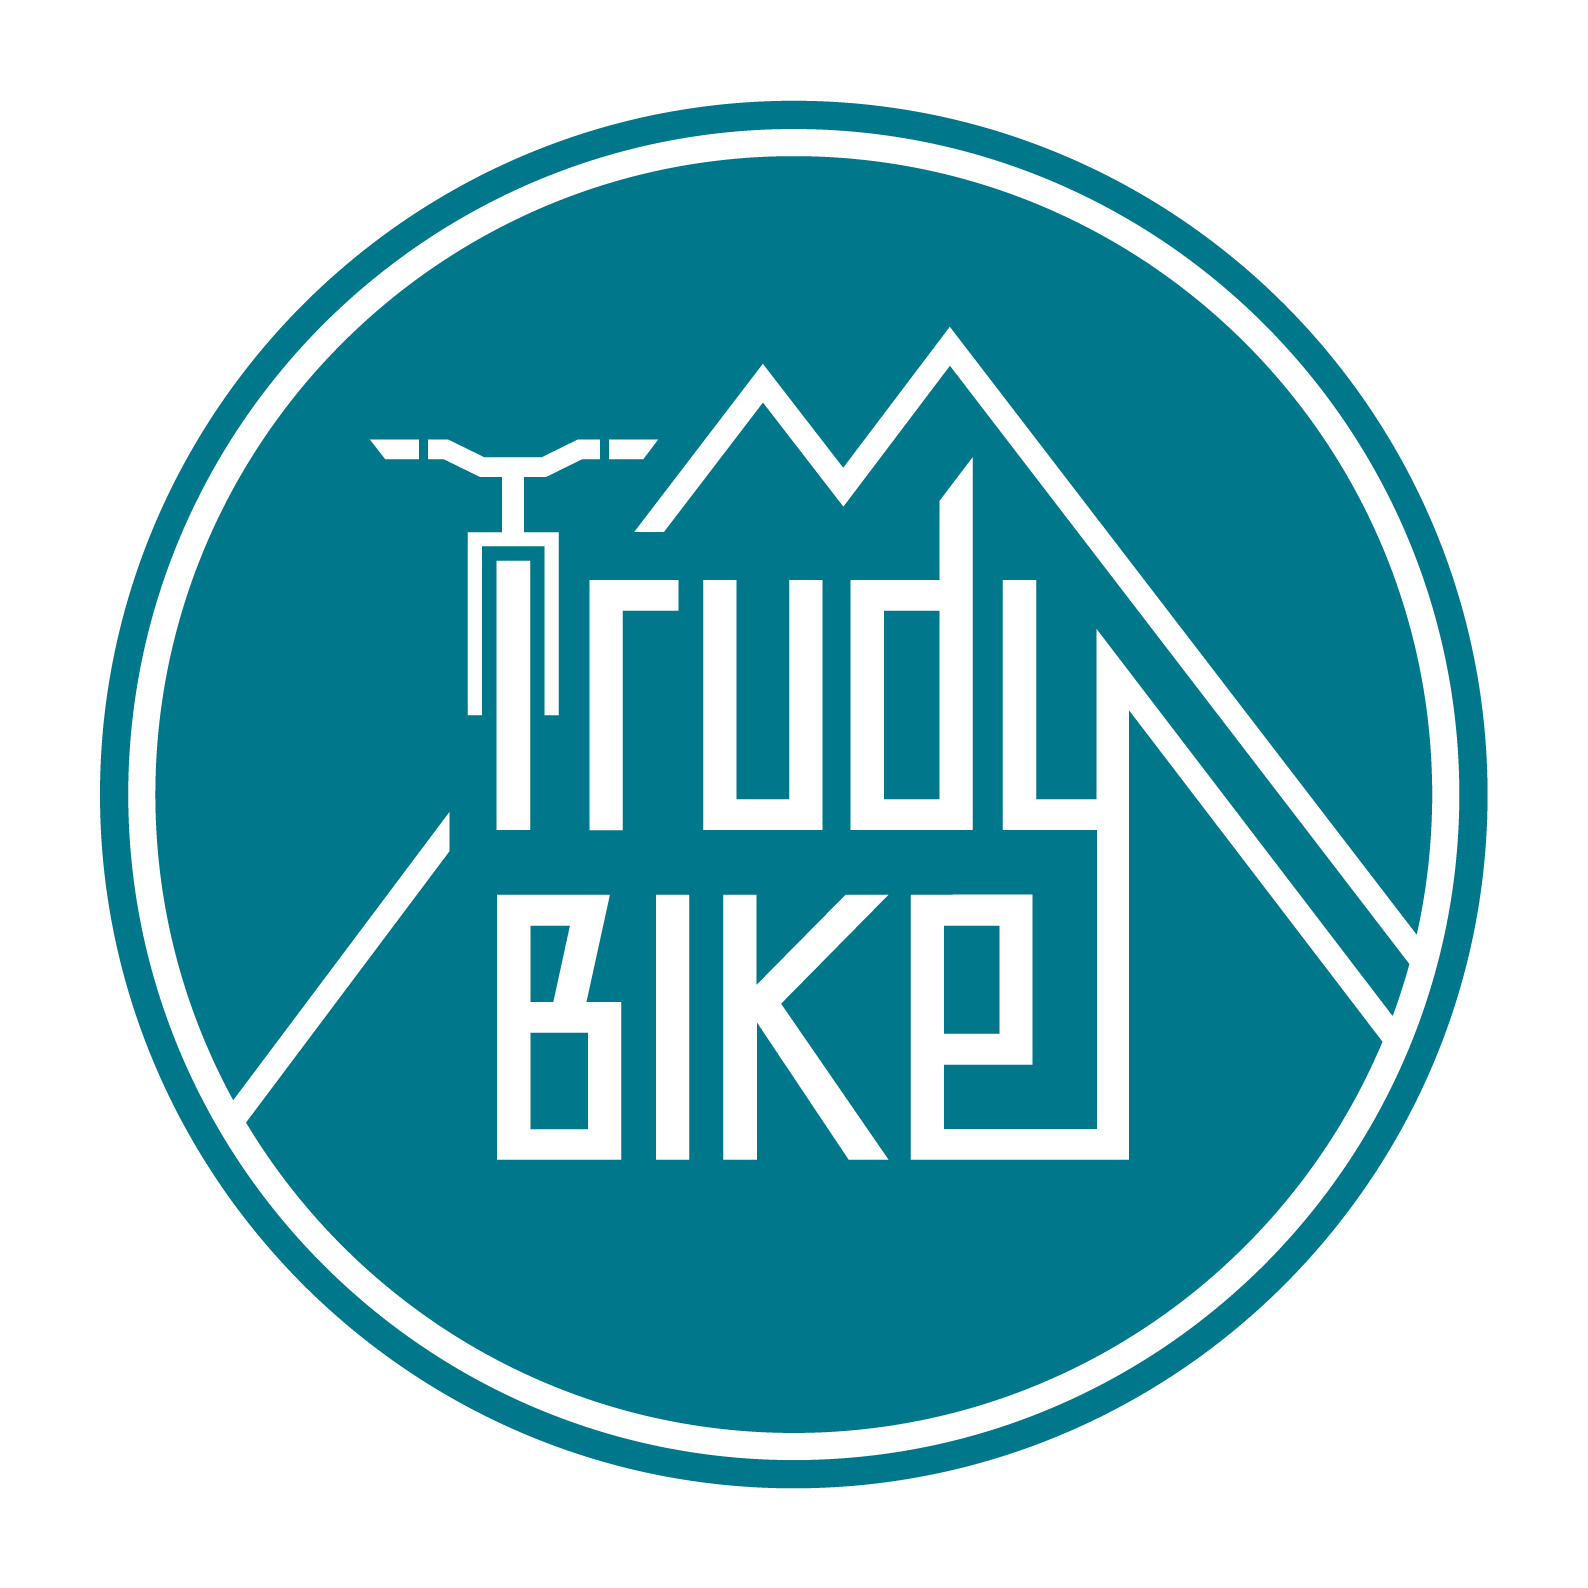 Trudy Bike